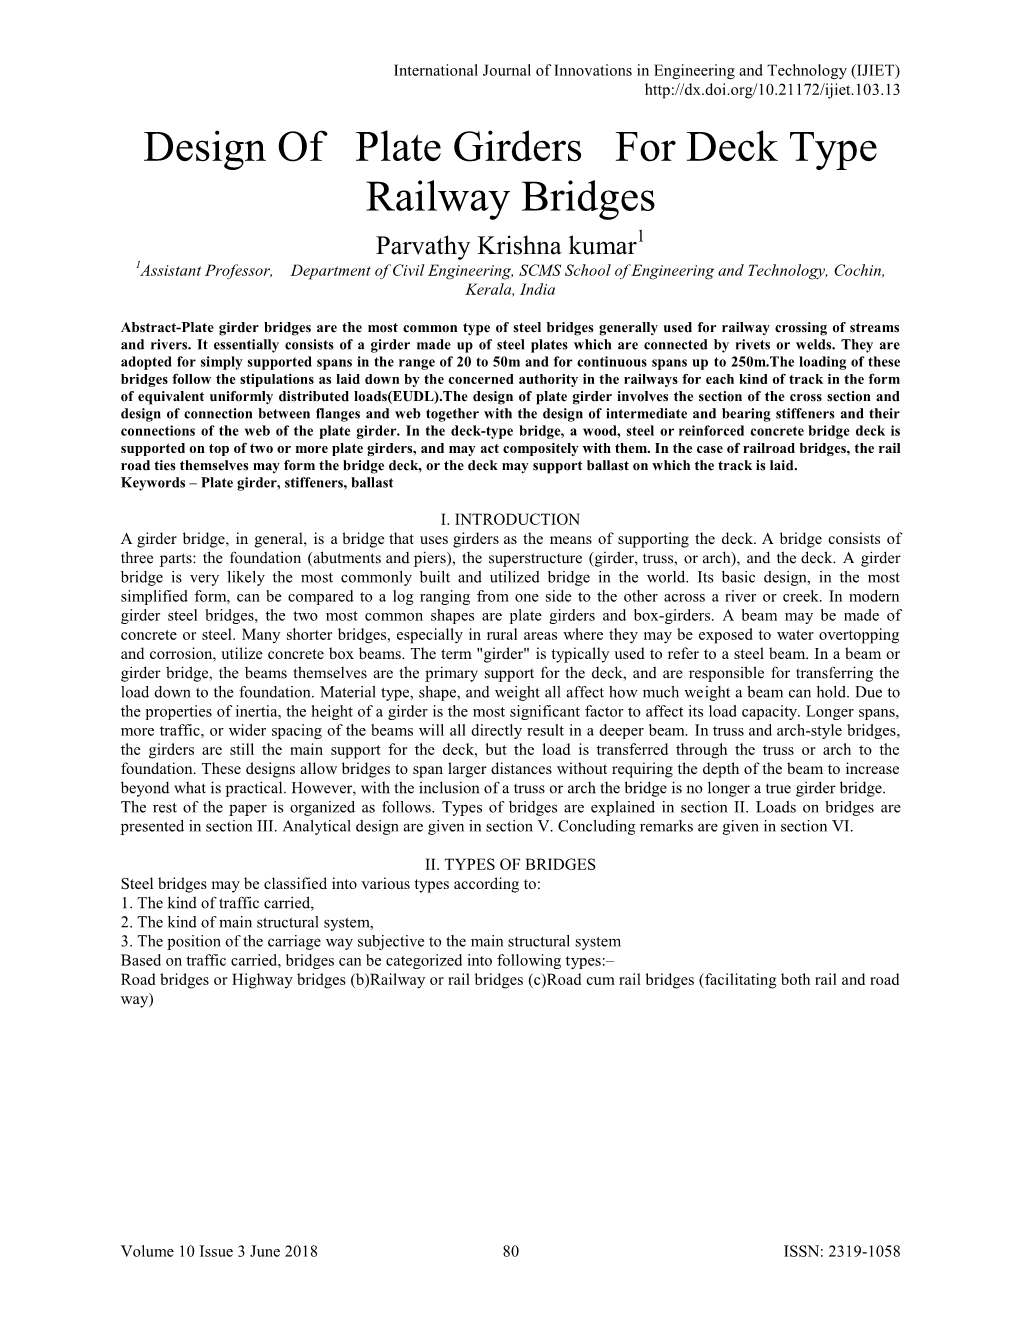 Design of Plate Girders for Deck Type Railway Bridges